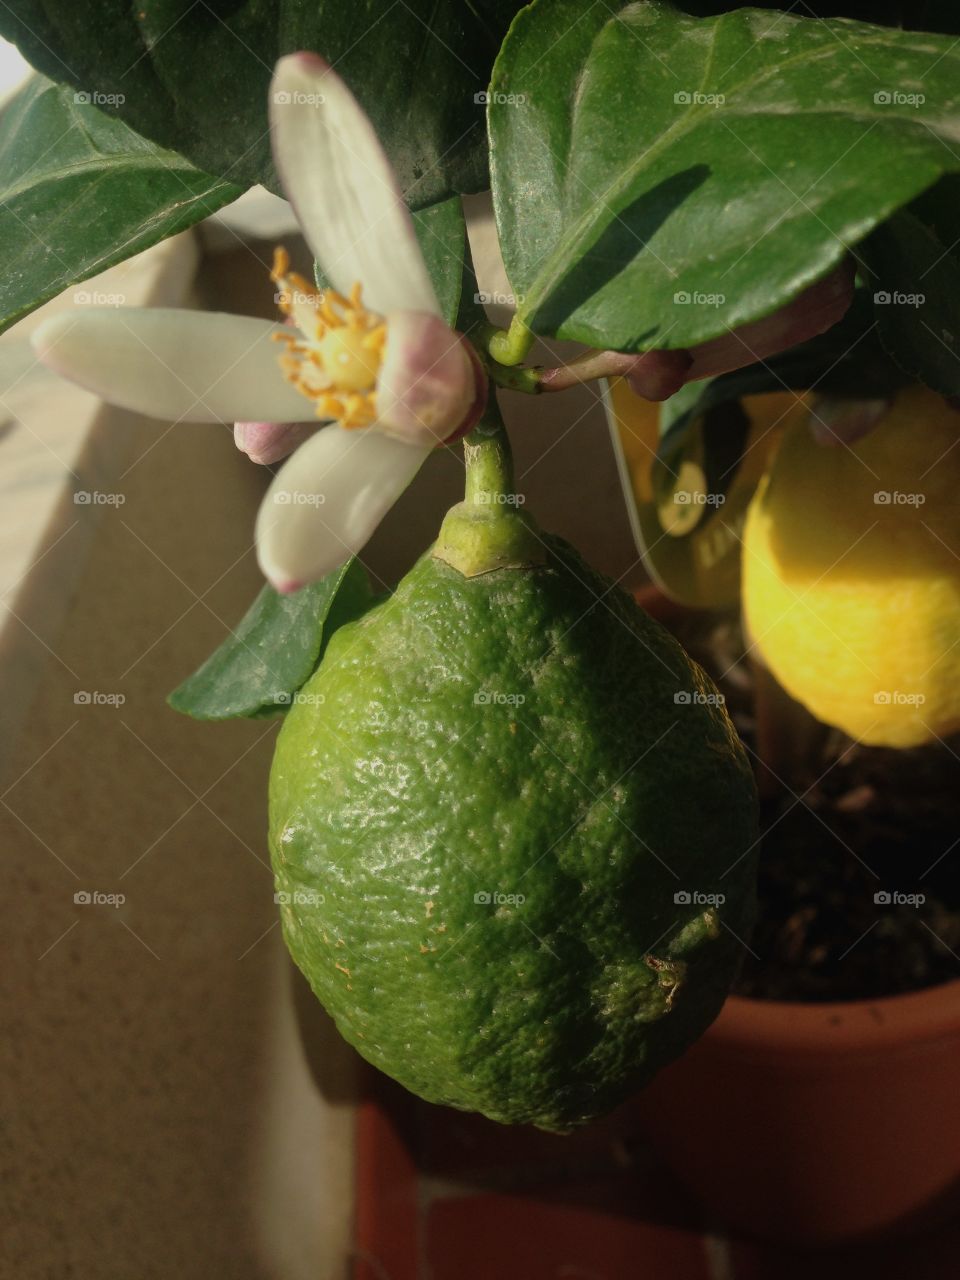 New lemon growth